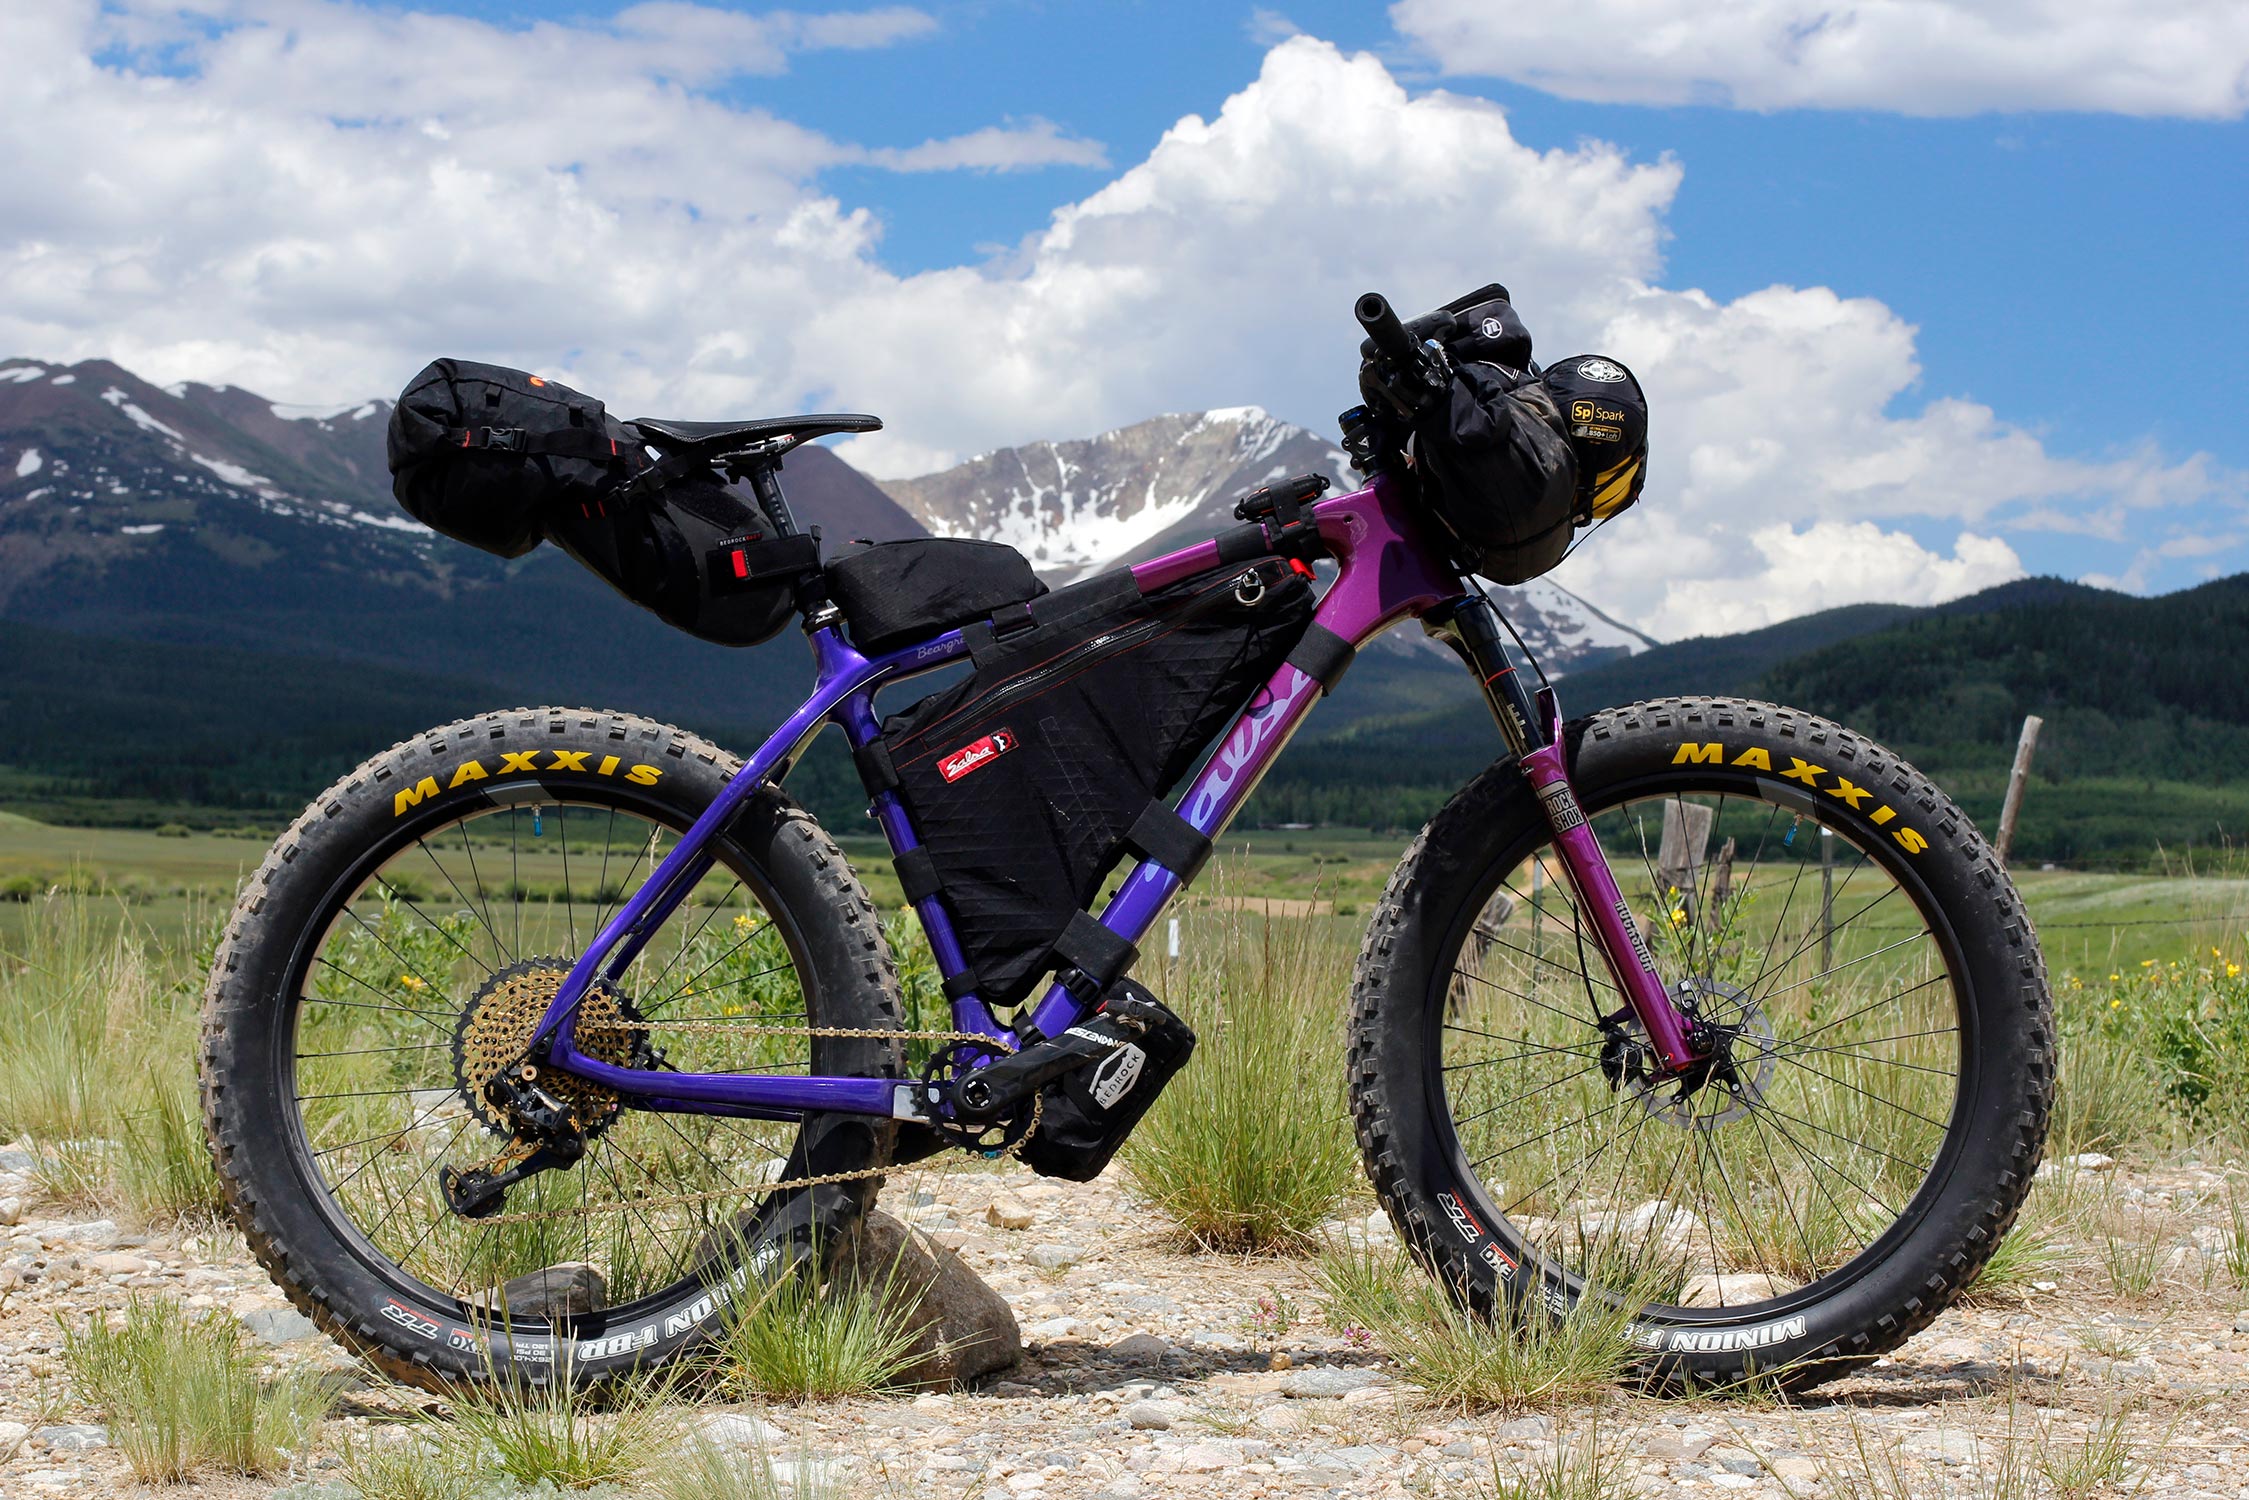 https://bikepacking.com/wp-content/uploads/2019/07/Colorado-Trail-Race-Rigs-jason-winkler.jpg